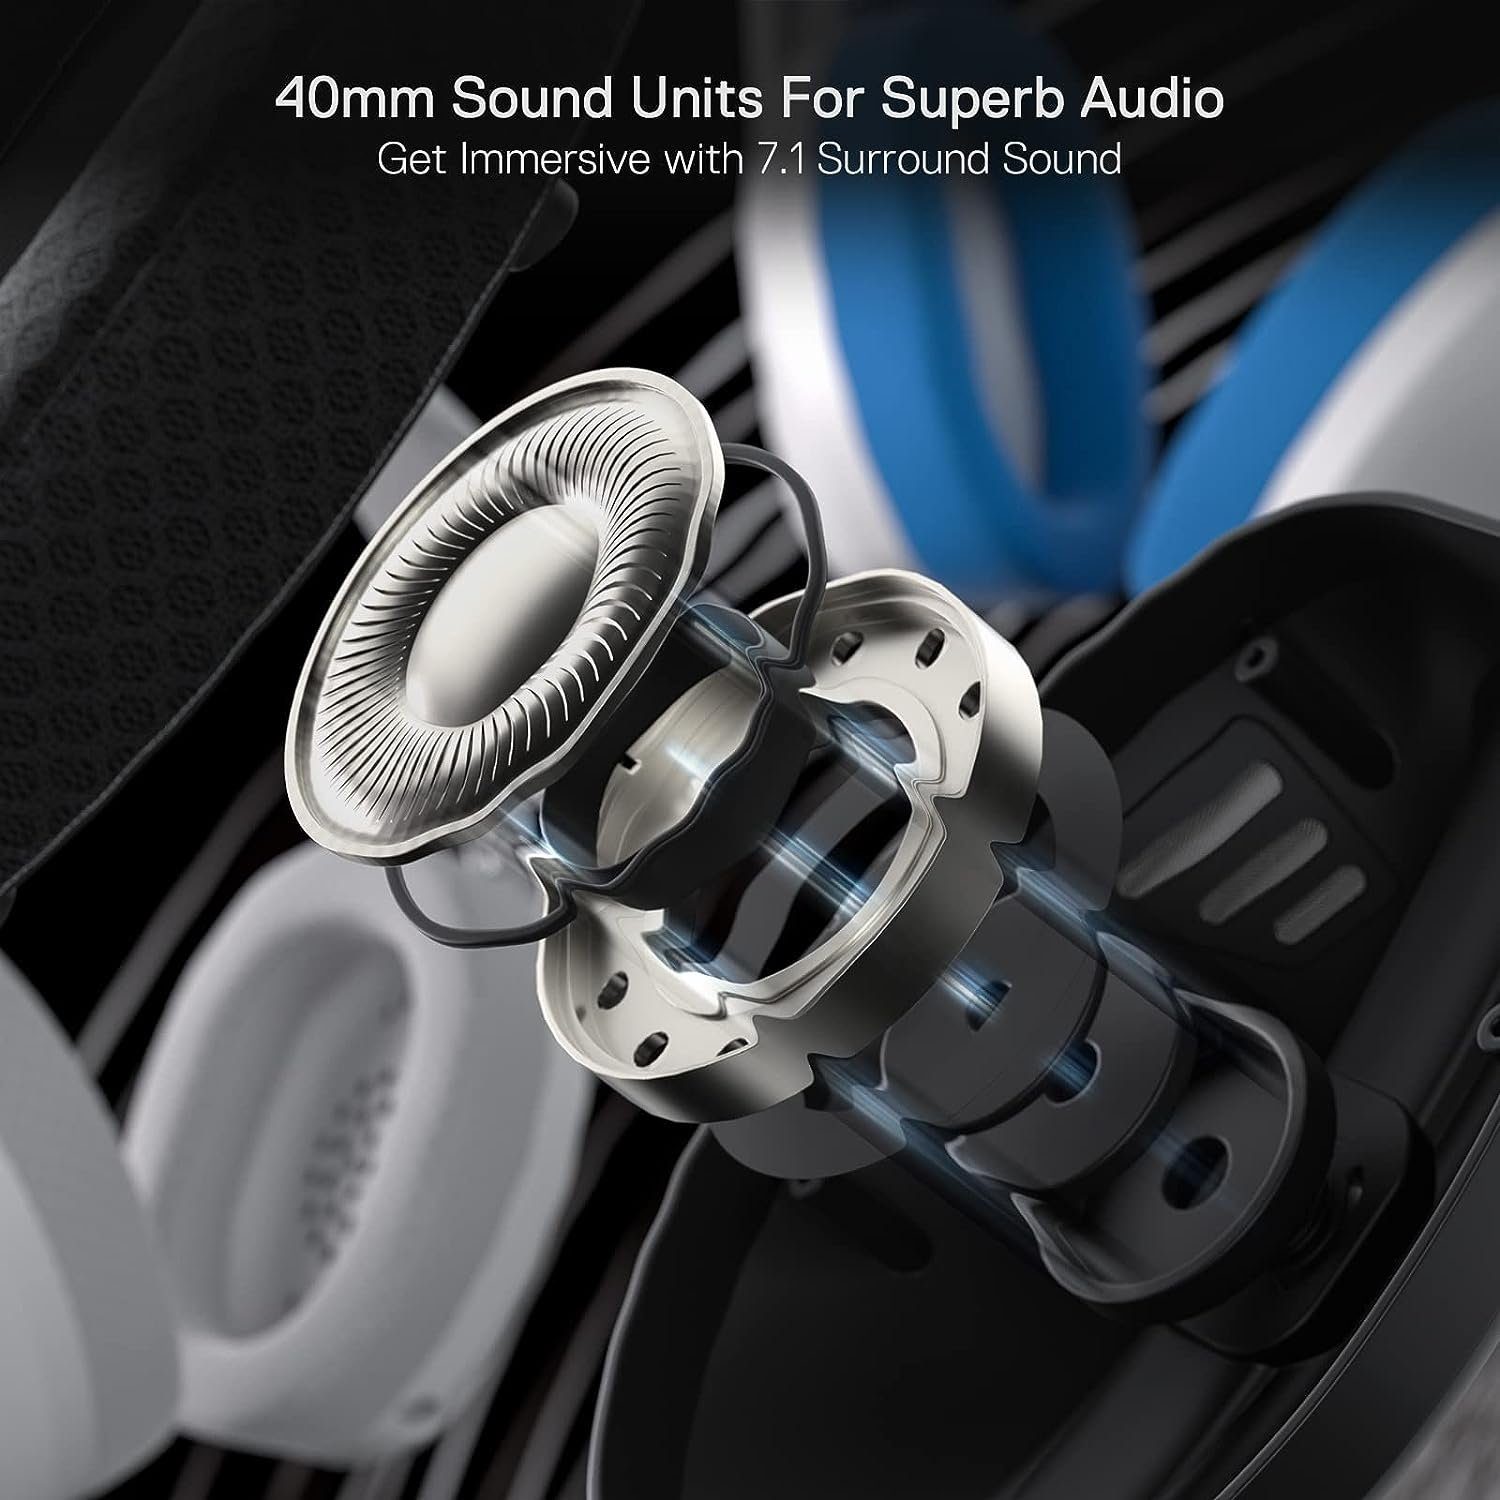 Ultimatives Surround Sound Gaming-Headset Vielseitigkeit) 40mm mit Komfort RGB-Beleuchtung. (Drahtloses Redragon Klang, Gaming-Headset: H848 Treiber., & 7.1 Gaming-Headset